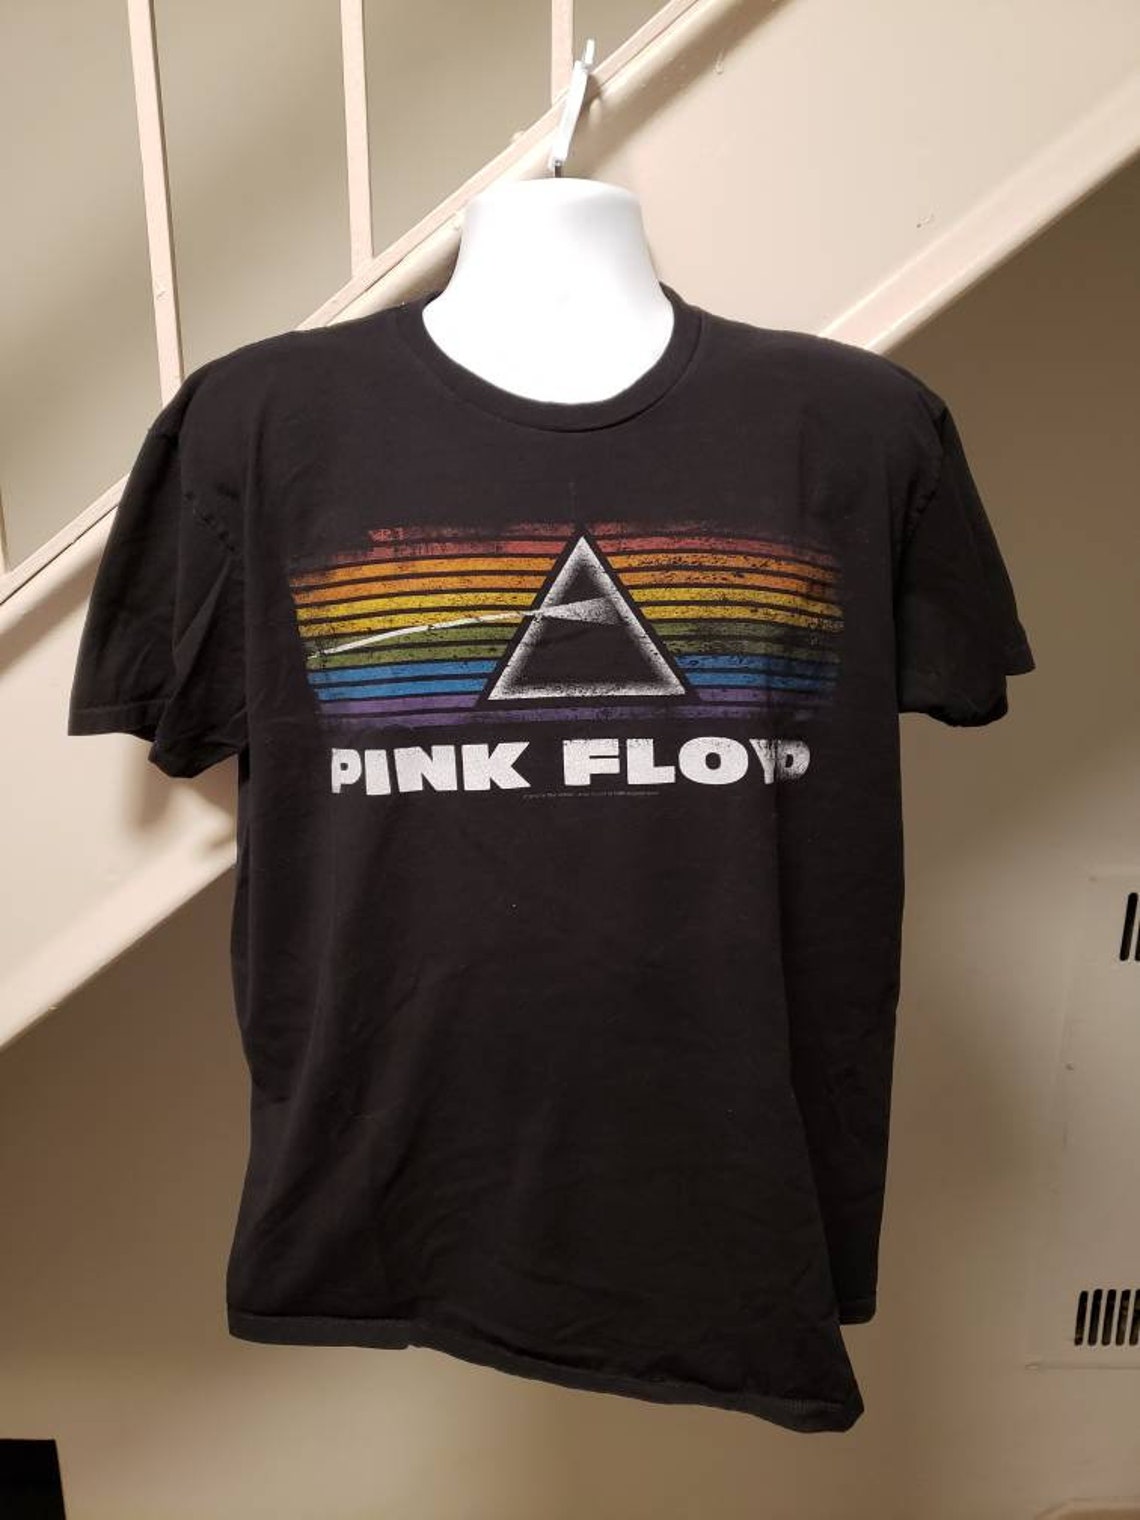 Pink Floyd XL T-Shirt | Etsy